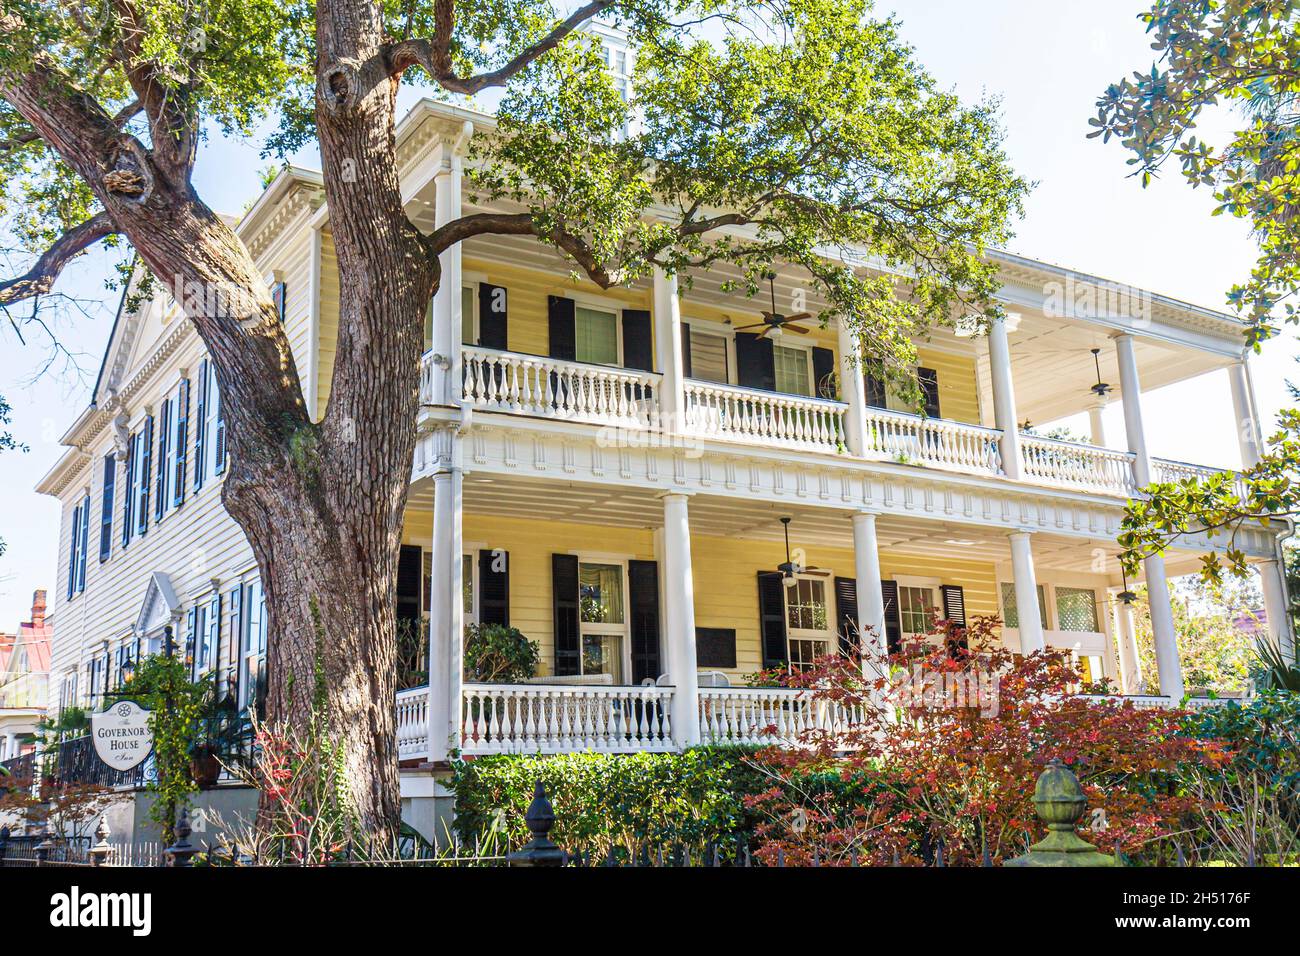 Charleston South Carolina,Historic District,Broad Street,mansion columns,Edward Rutledge House Governor's House Inn,bed & breakfast hotel lodging Stock Photo